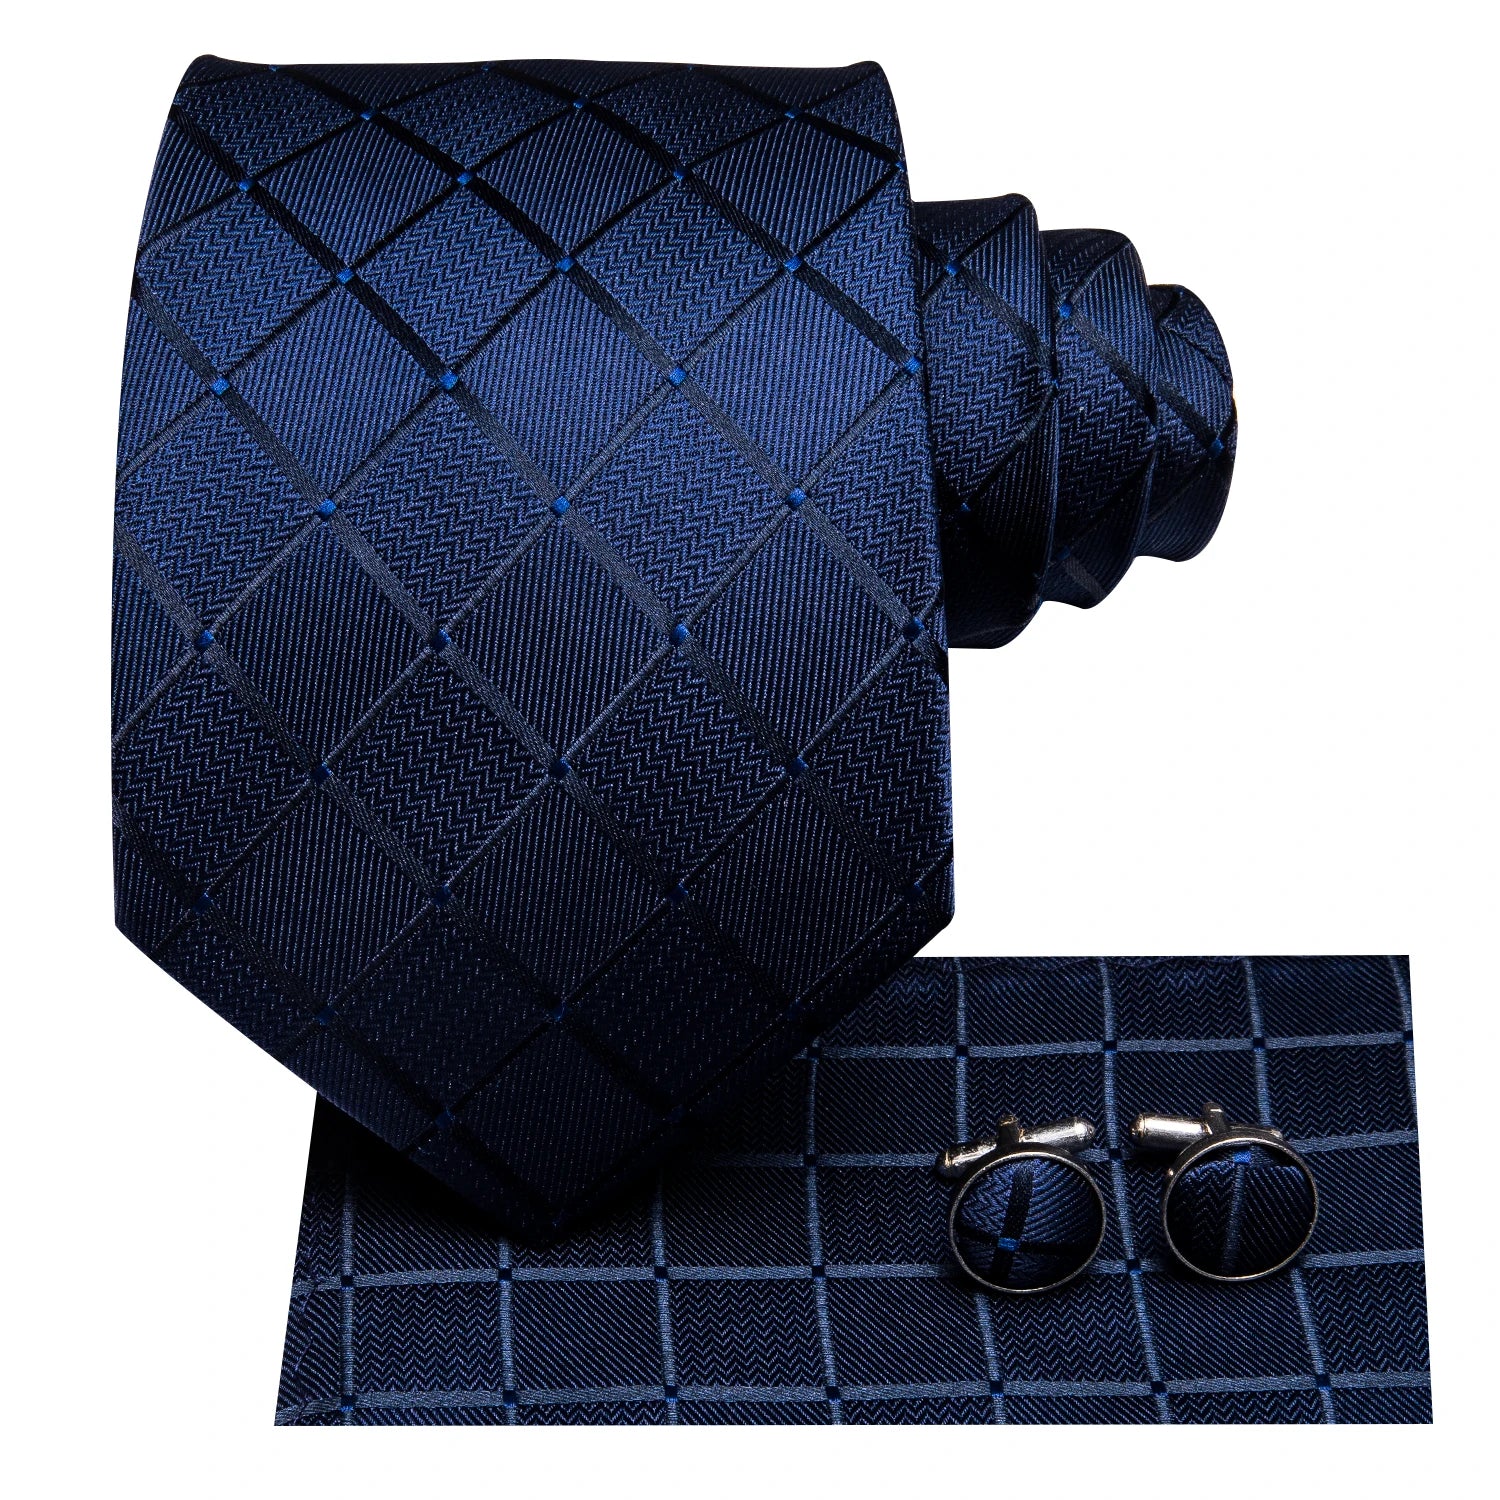 Luxury Hi-Tie 100% Silk Paisley Blue Business Necktie with Pocket Square and Cufflinks Set